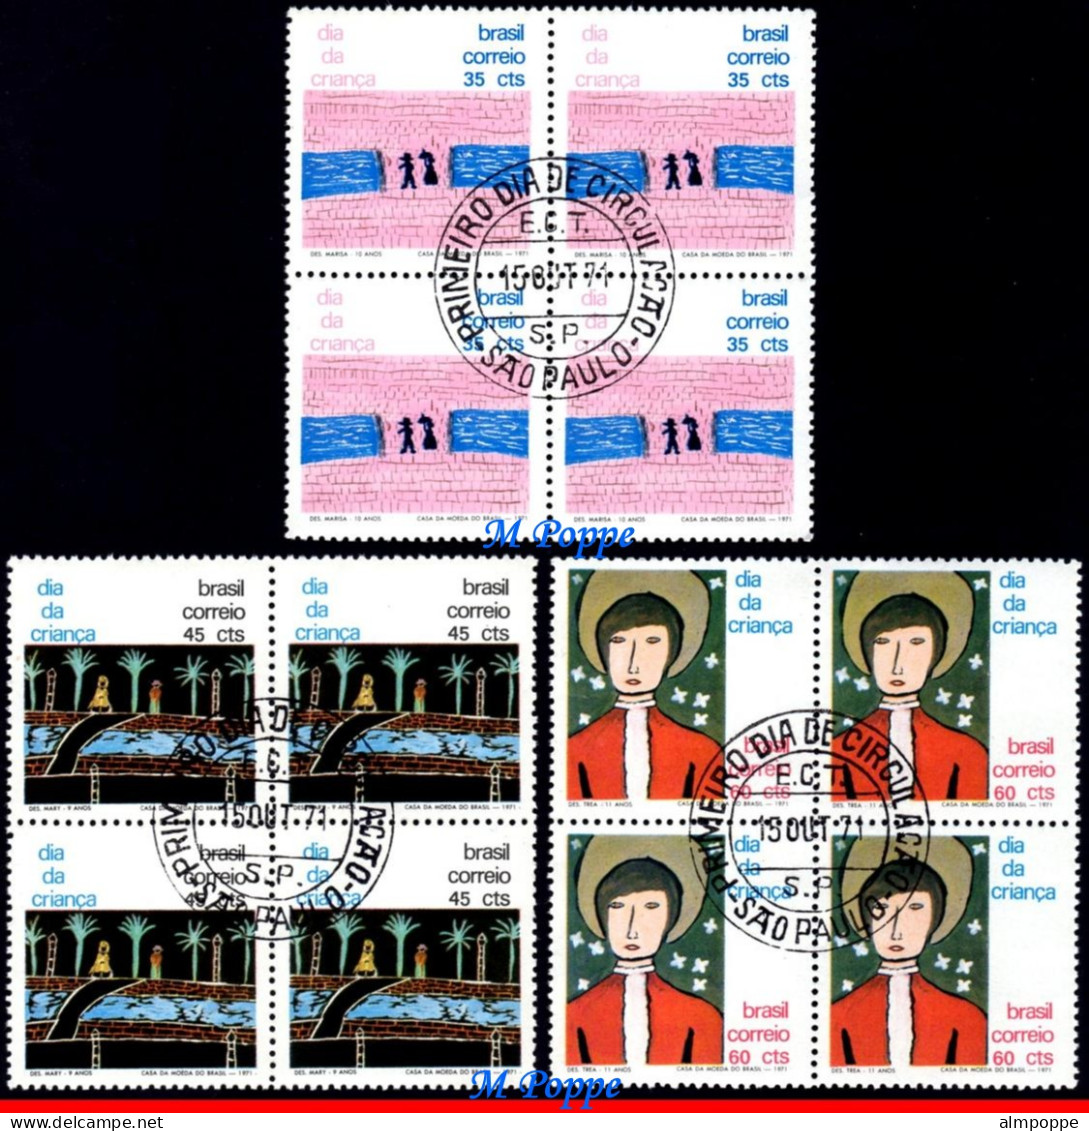 Ref. BR-1200-02-QC BRAZIL 1971 - CHILDREN'S DAY, BRIDGE,MI# 1294-96, CANCELED NH, CHILDREN DRAWING 12V Sc# 1200-1202 - Used Stamps